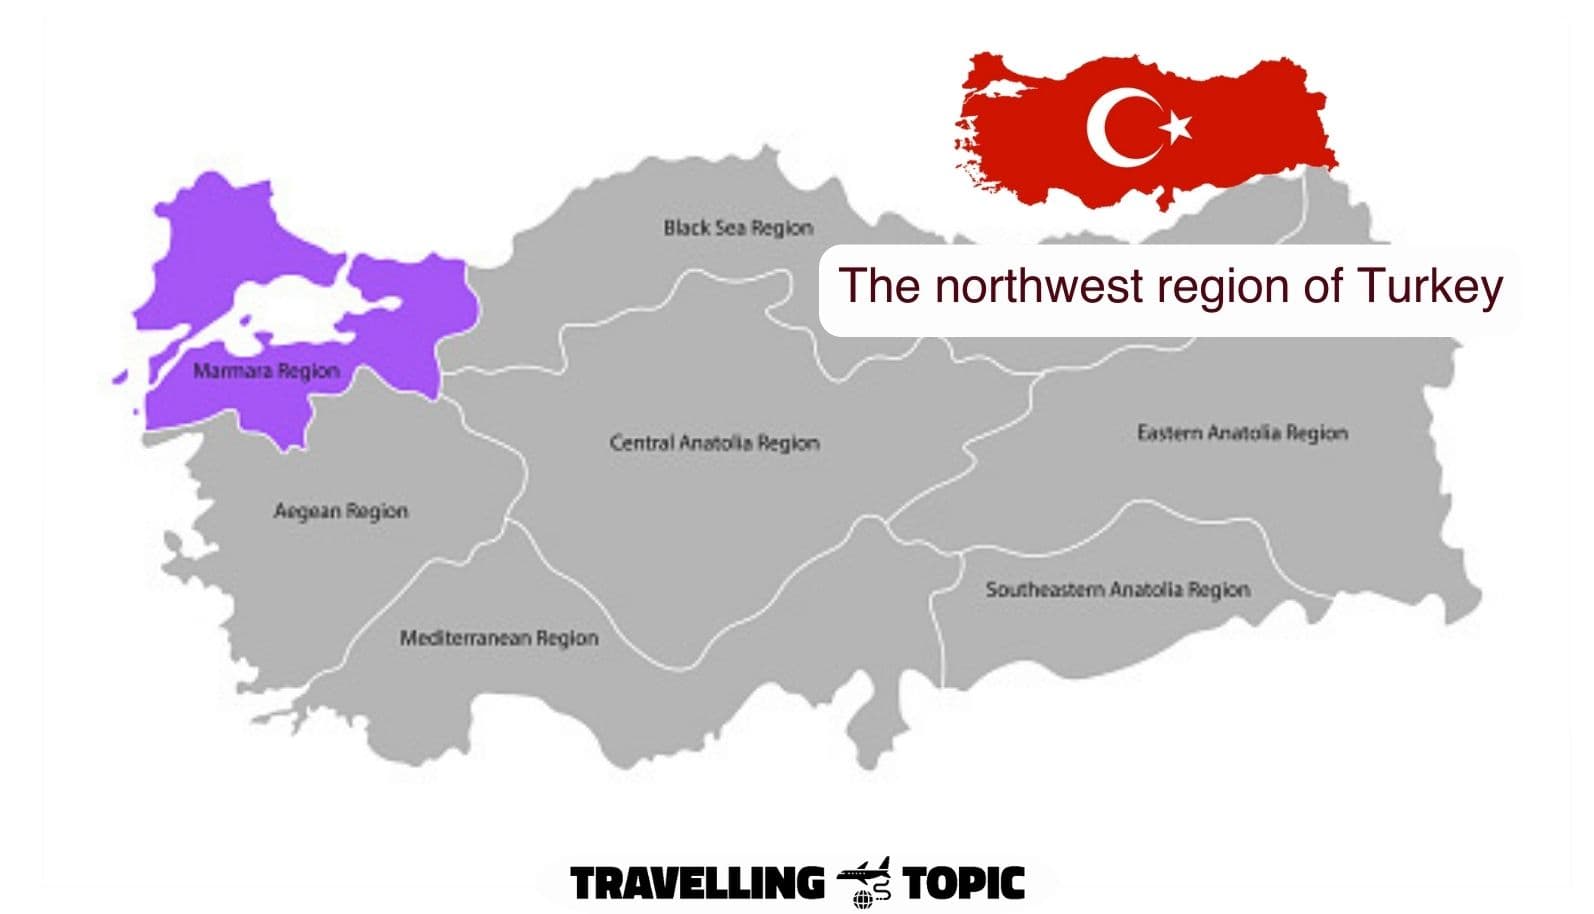 The northwest region of Turkey; Where is the Marmara region on the map?